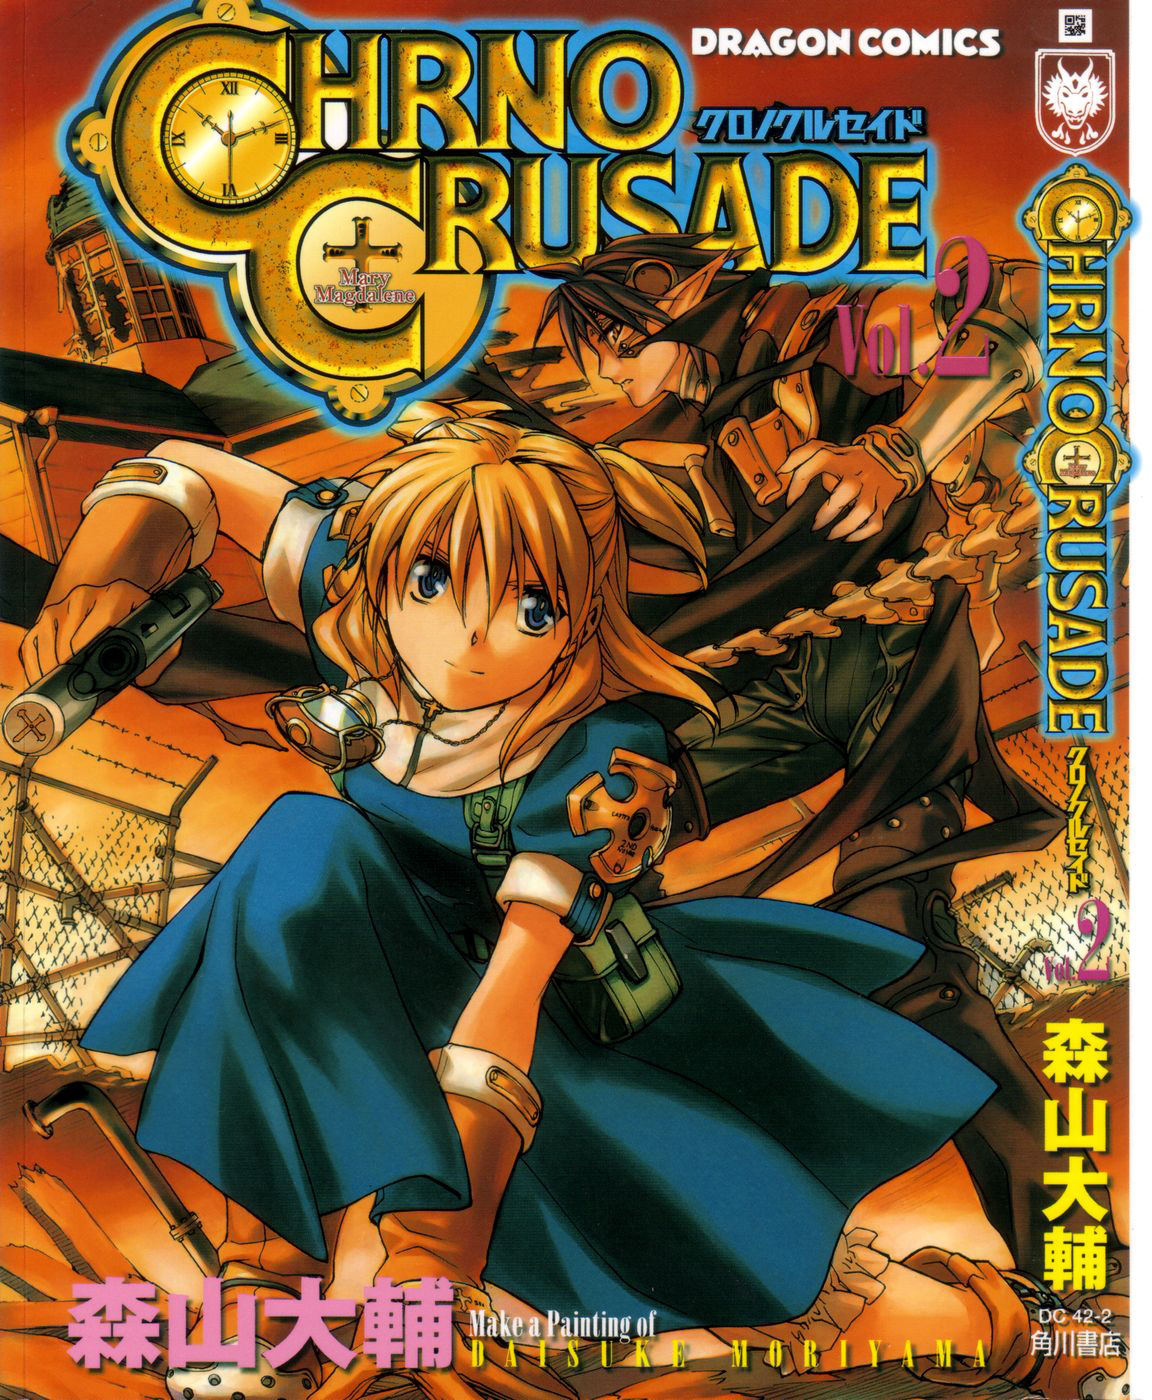 [Manga] Chrono Crusade (Đọc online tại SSF) CHRNO-CRUSADE-02-000-a